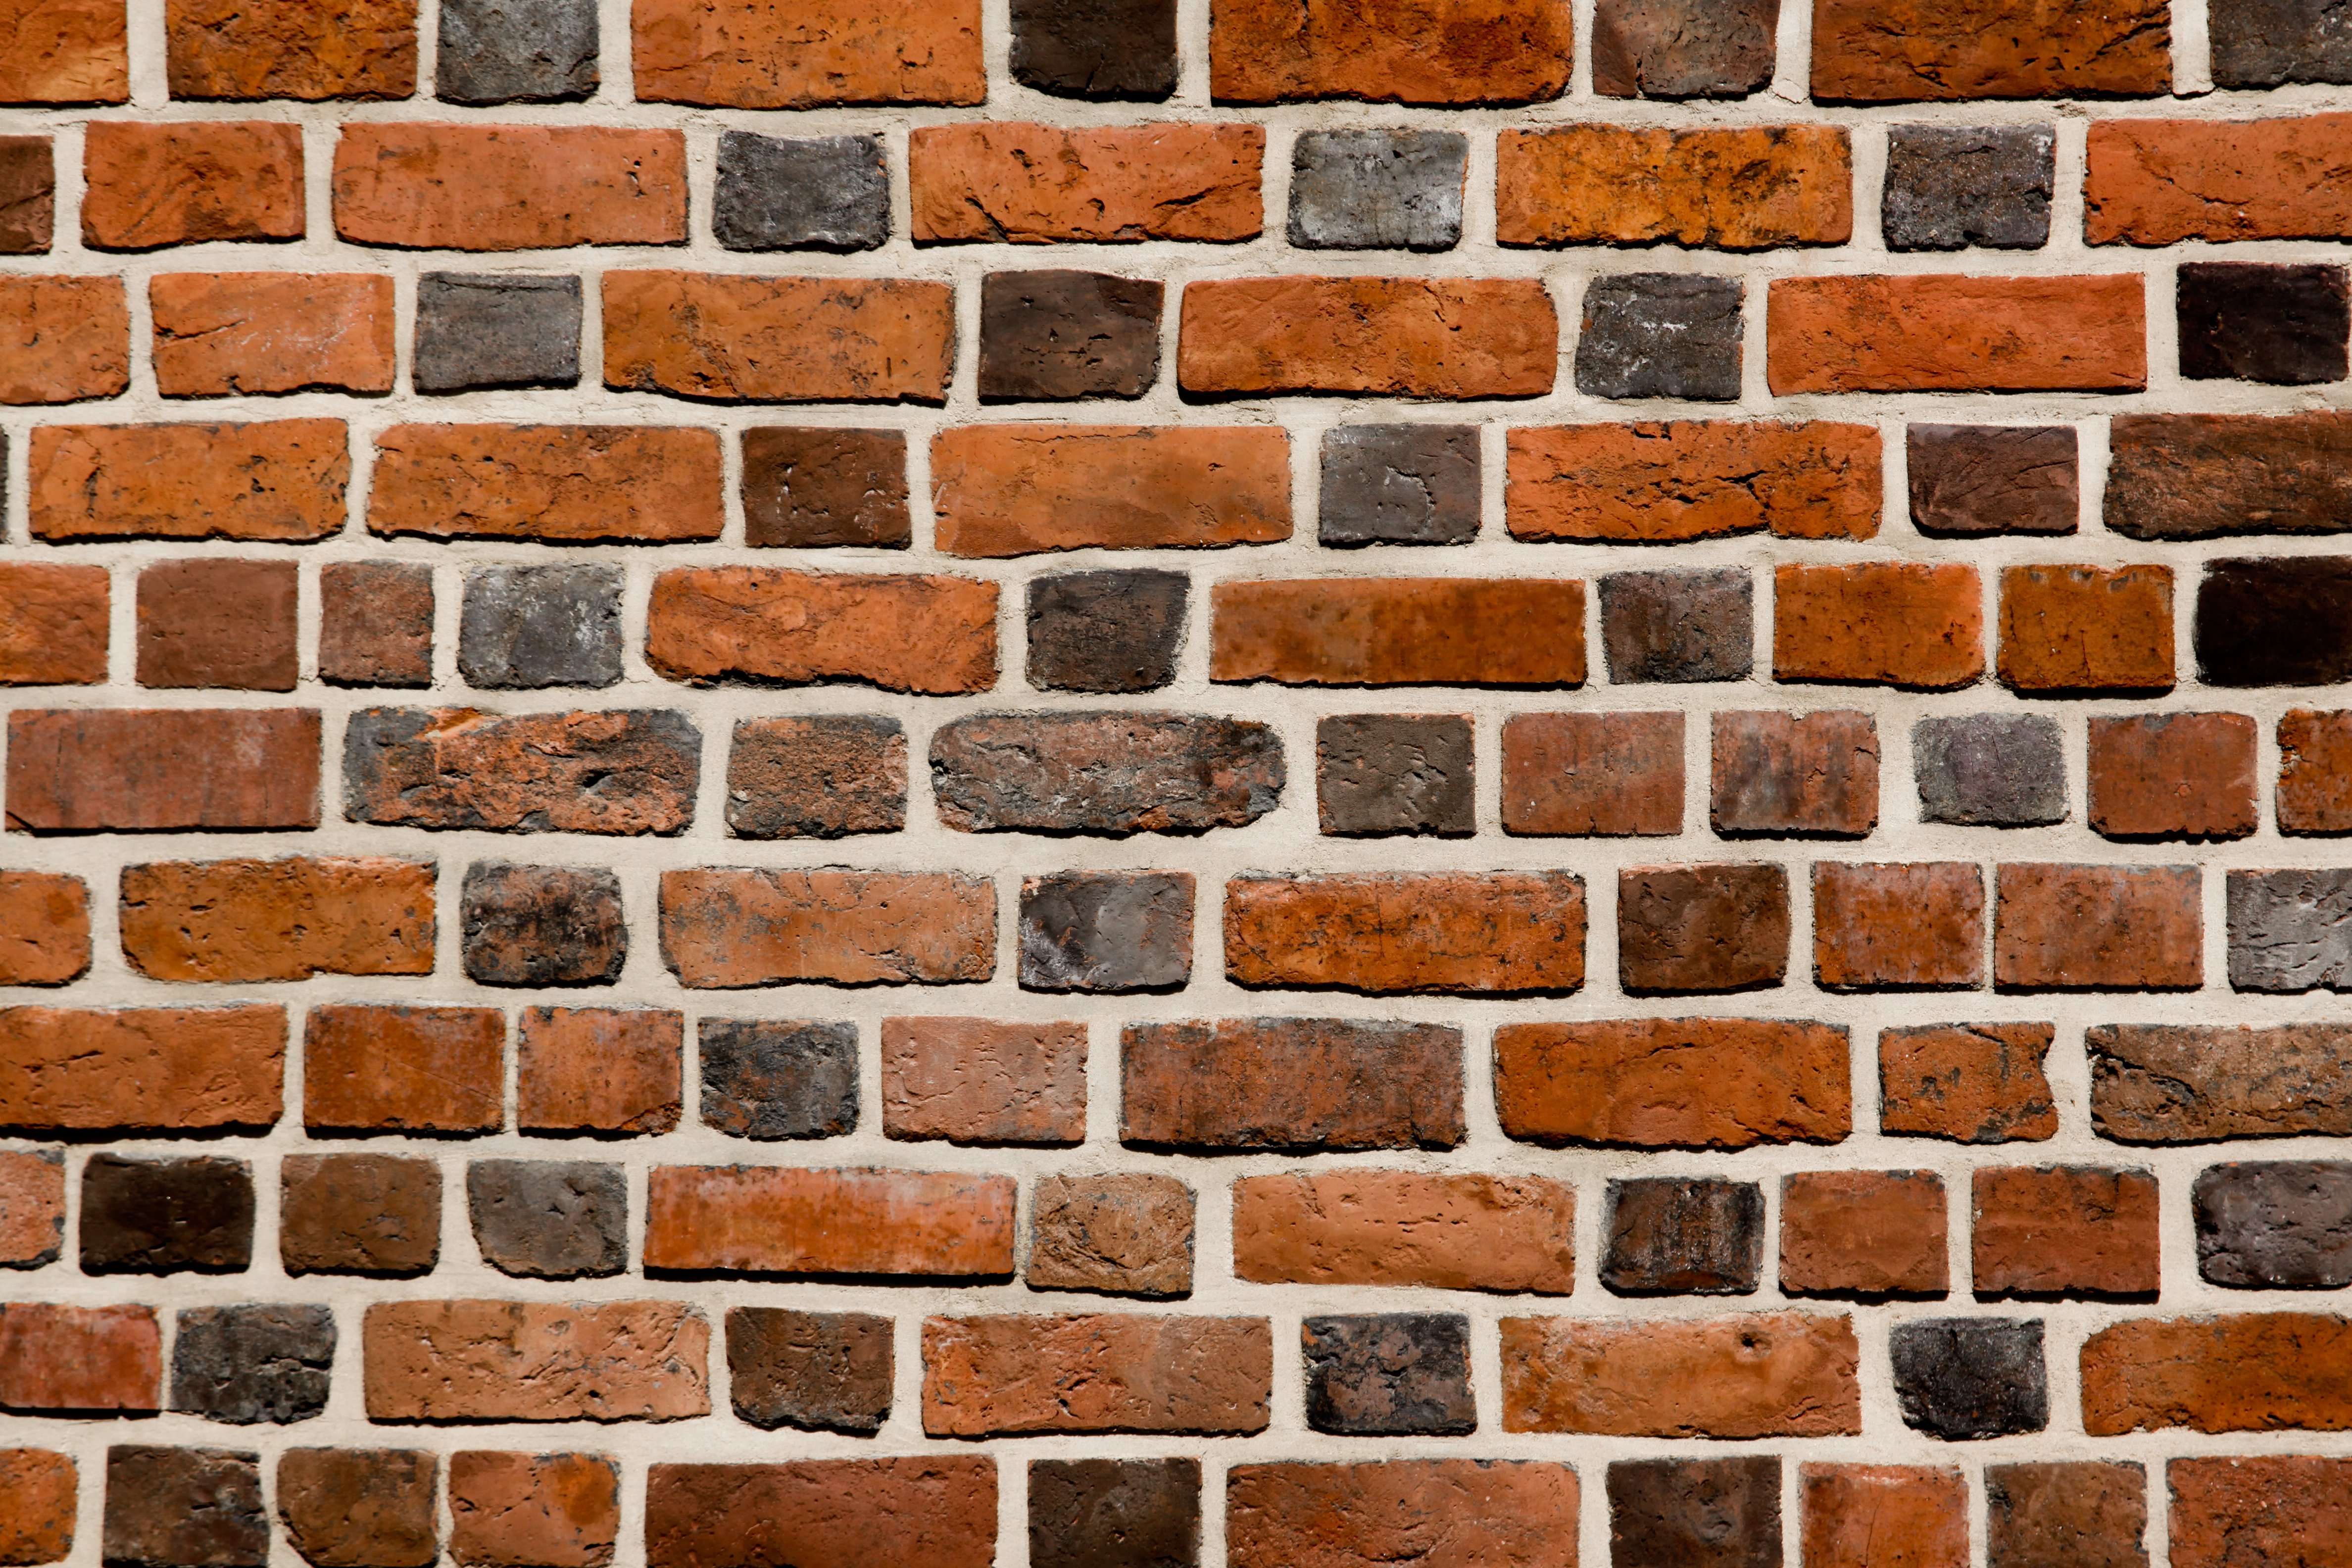 File:Brick wall close-up view.jpg - Wikimedia Commons